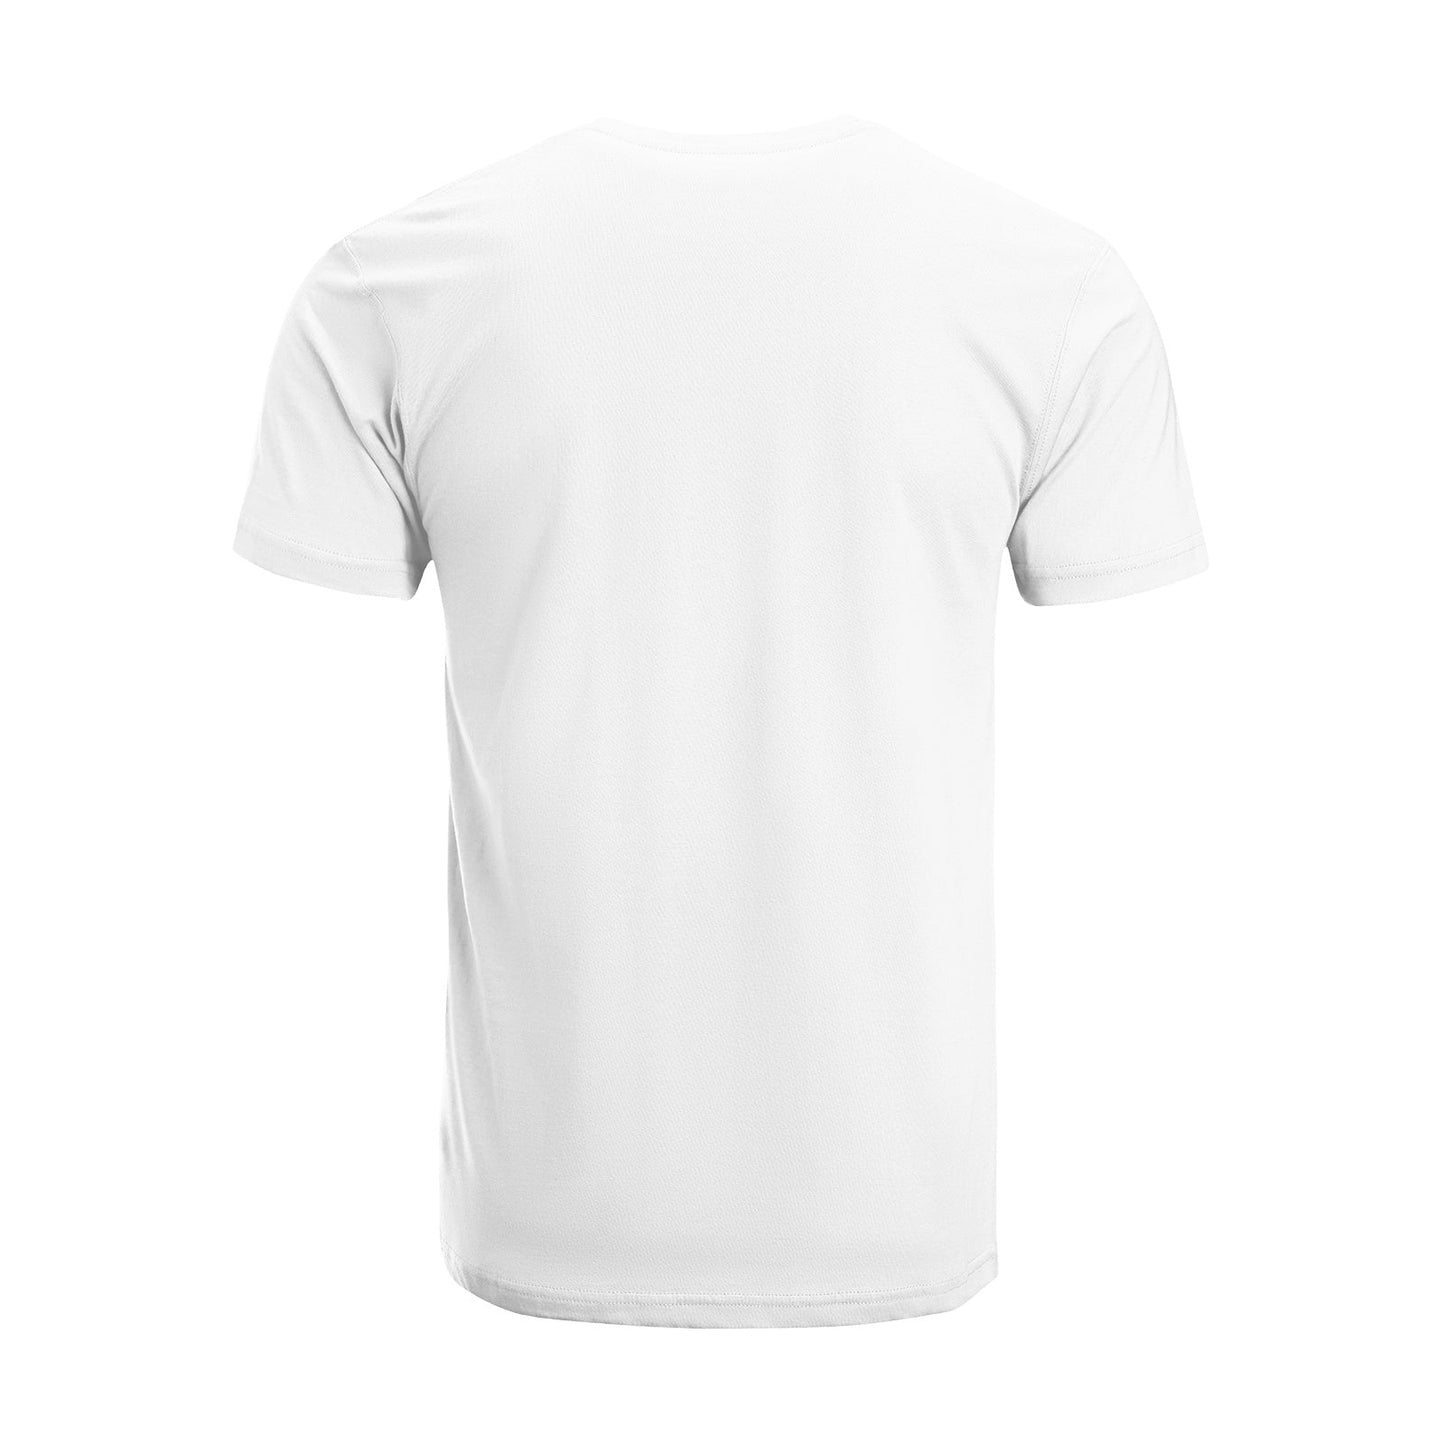 Unisex Short Sleeve Crew Neck Cotton Jersey T-Shirt USA 07